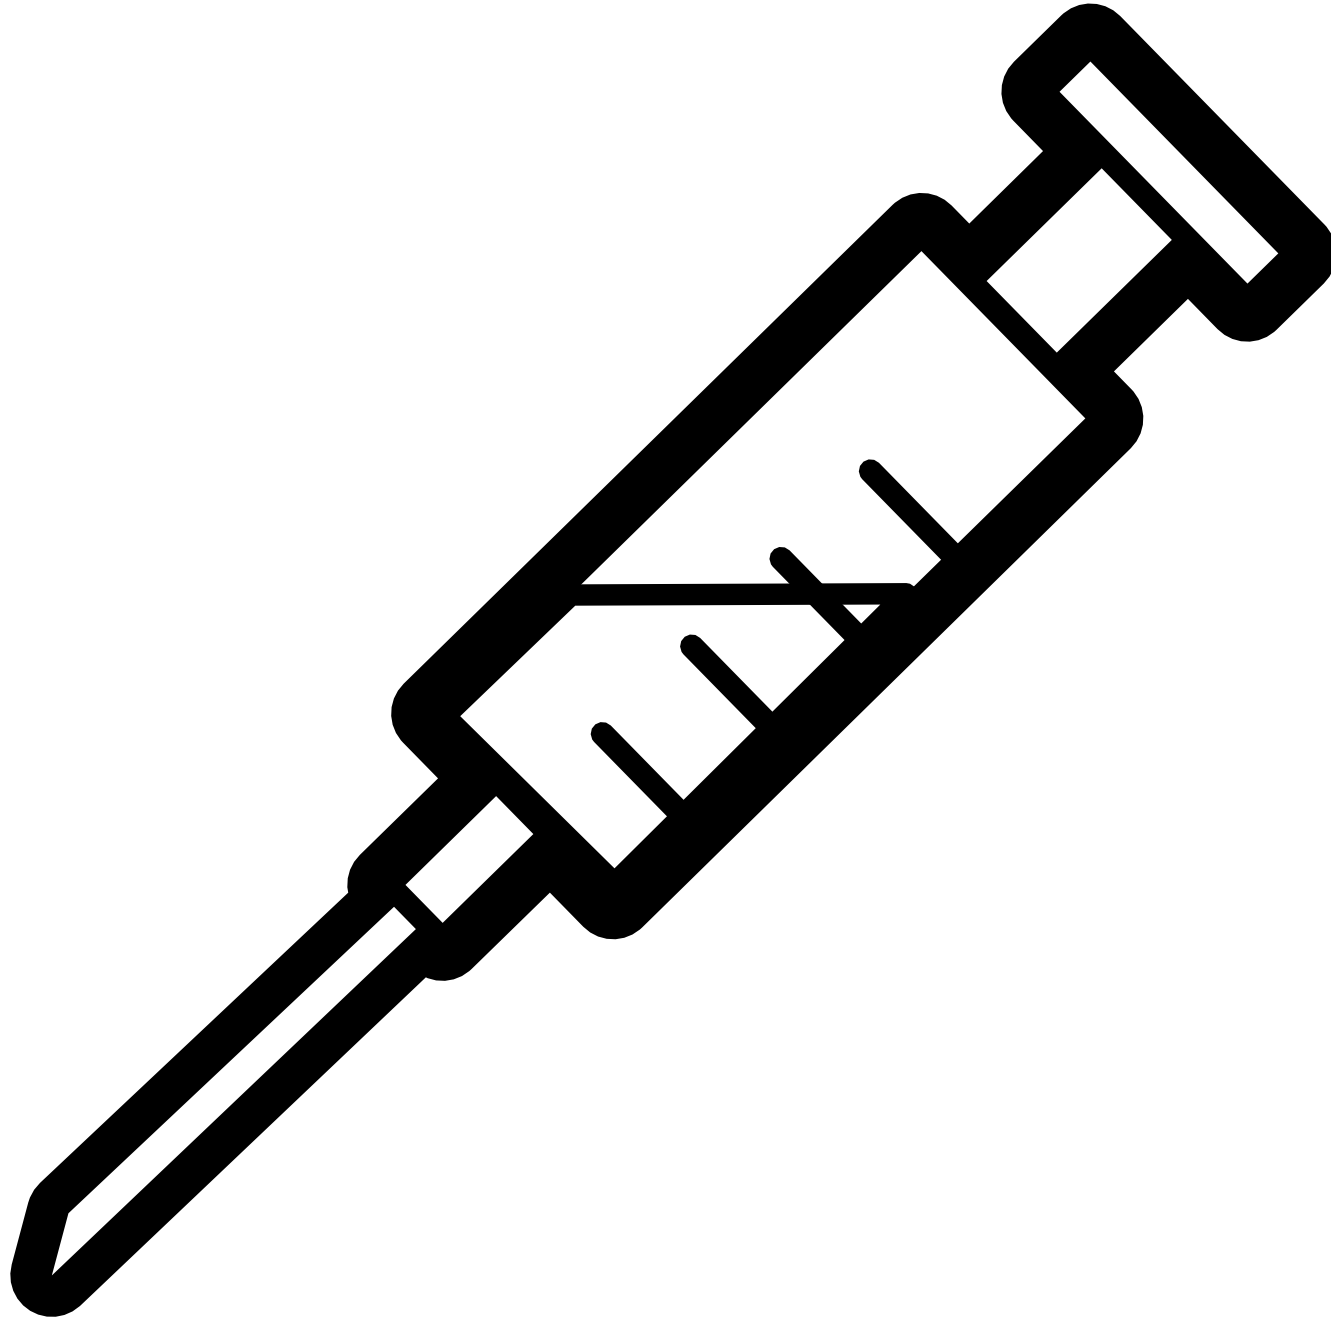 Syringe Hypodermic needle Clip art